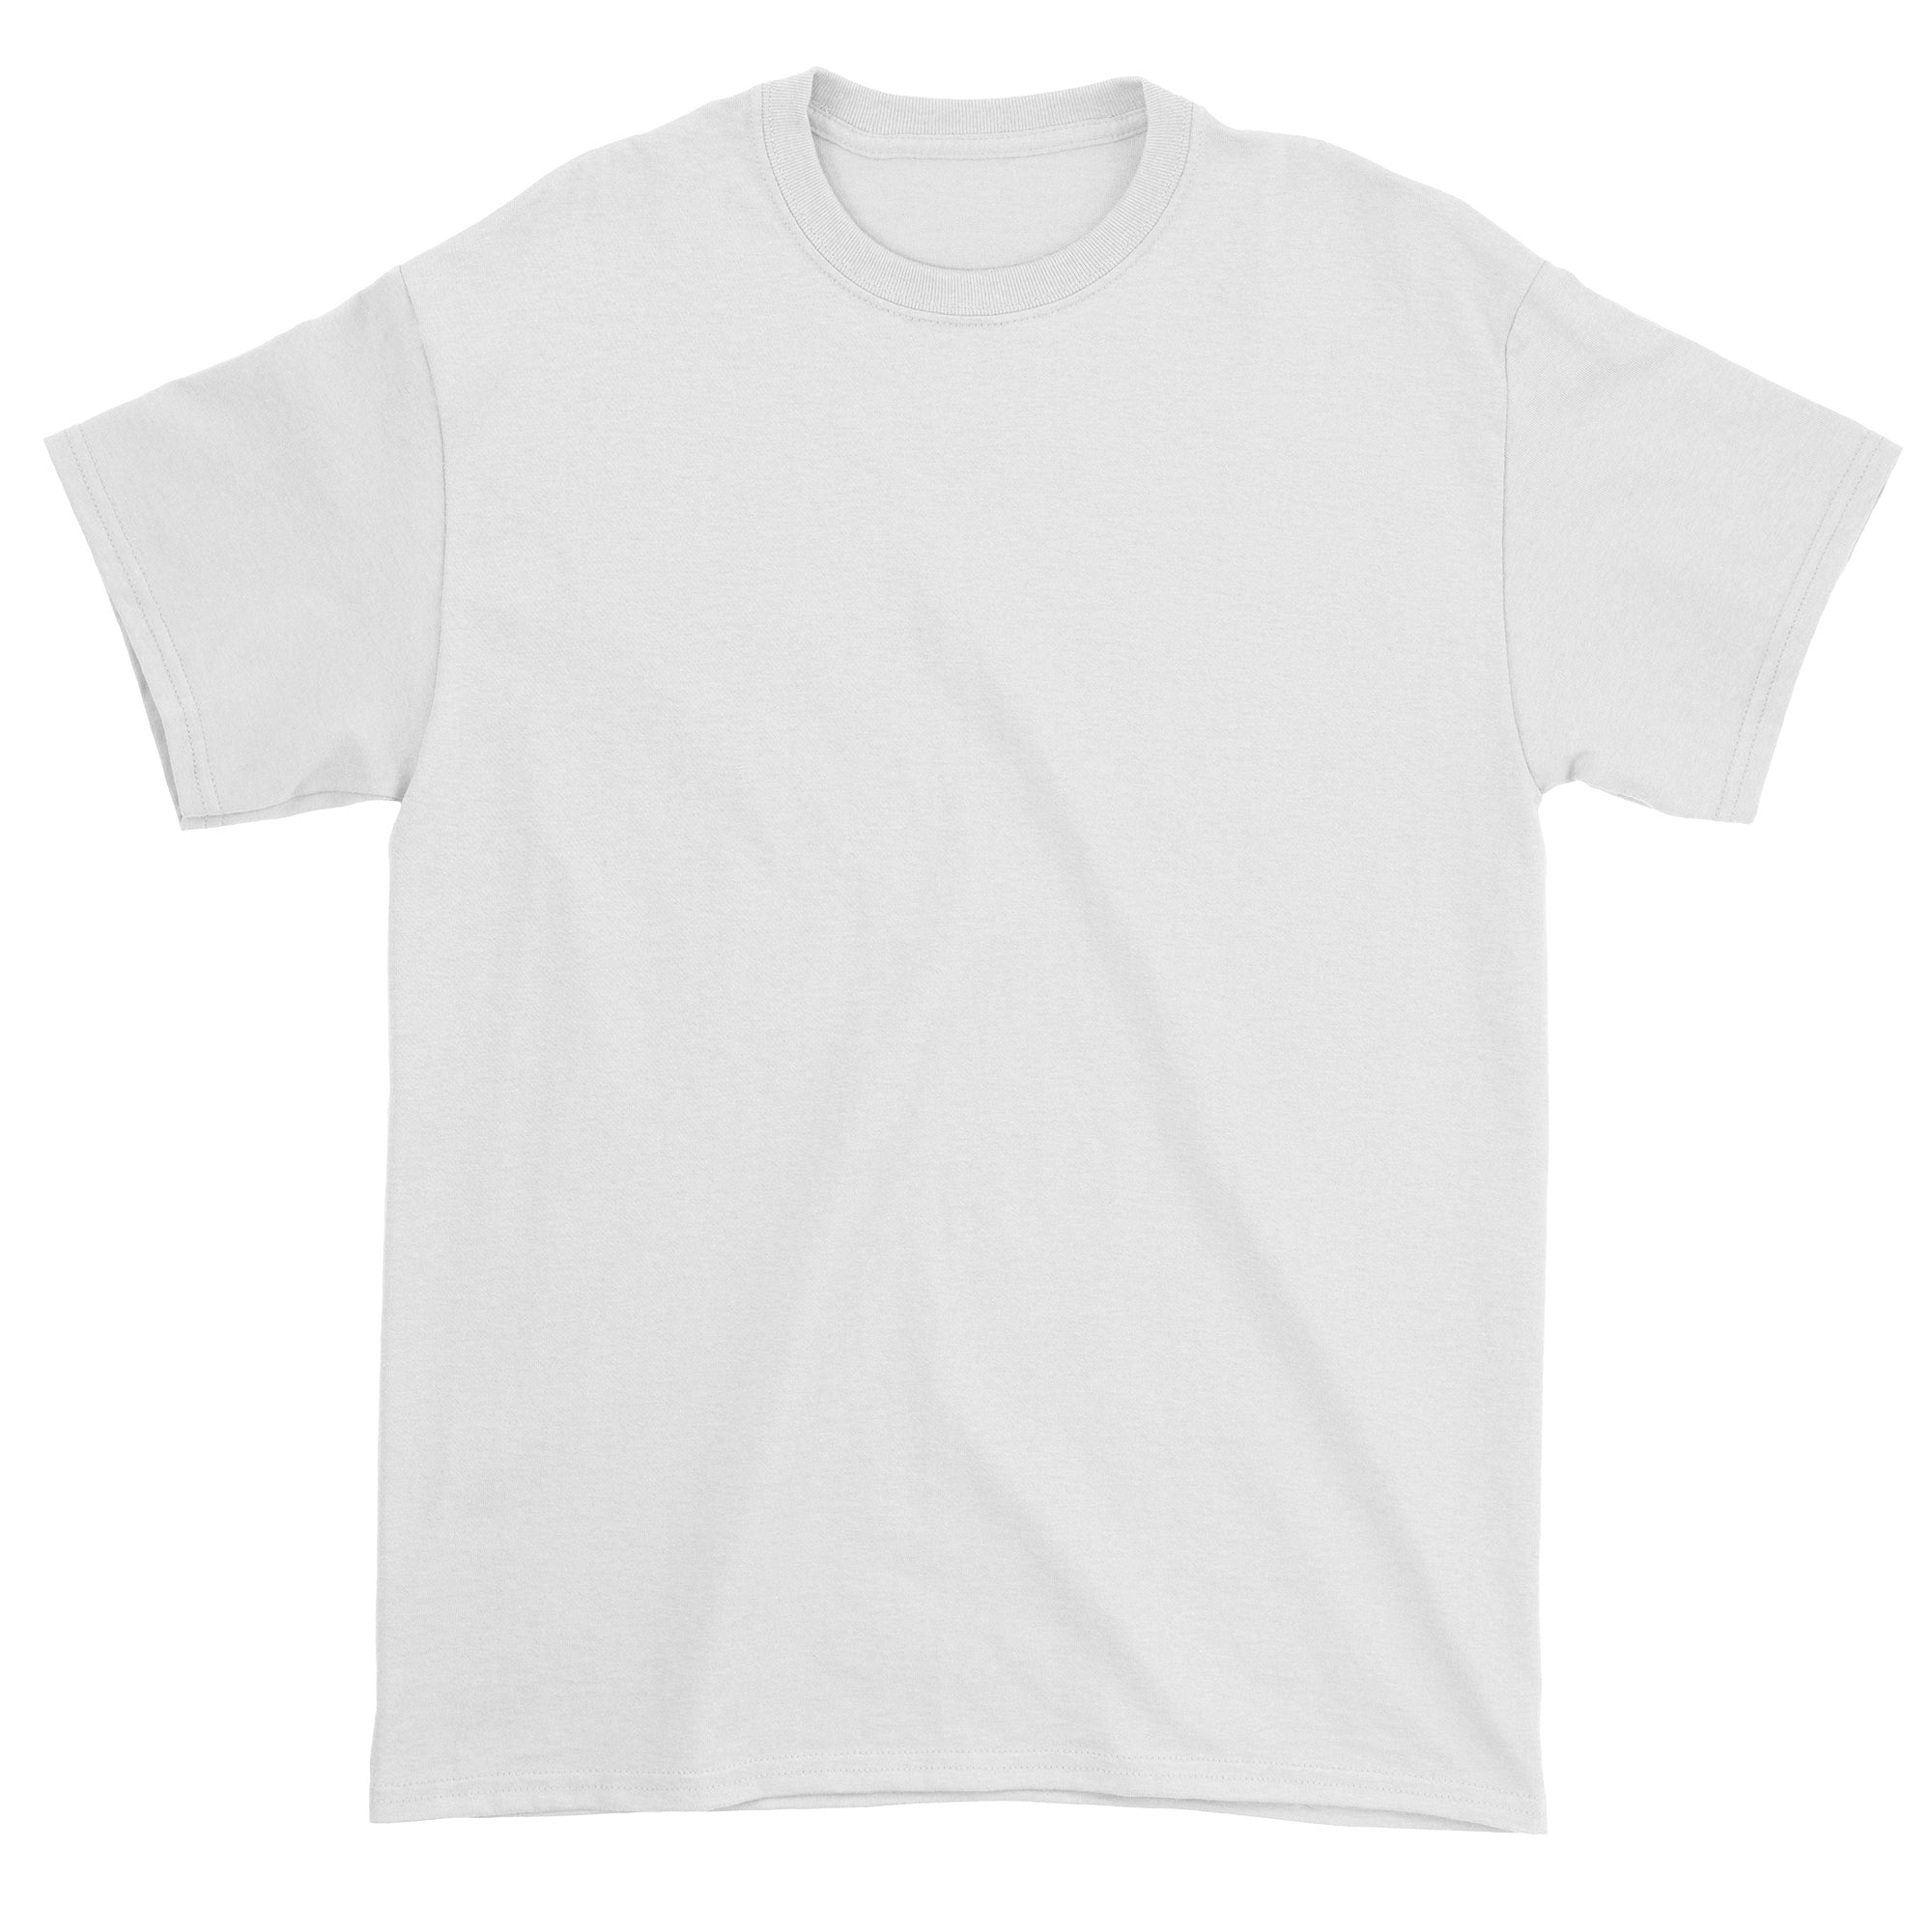 Quicksaving Funny Gamer Men's T-Shirt